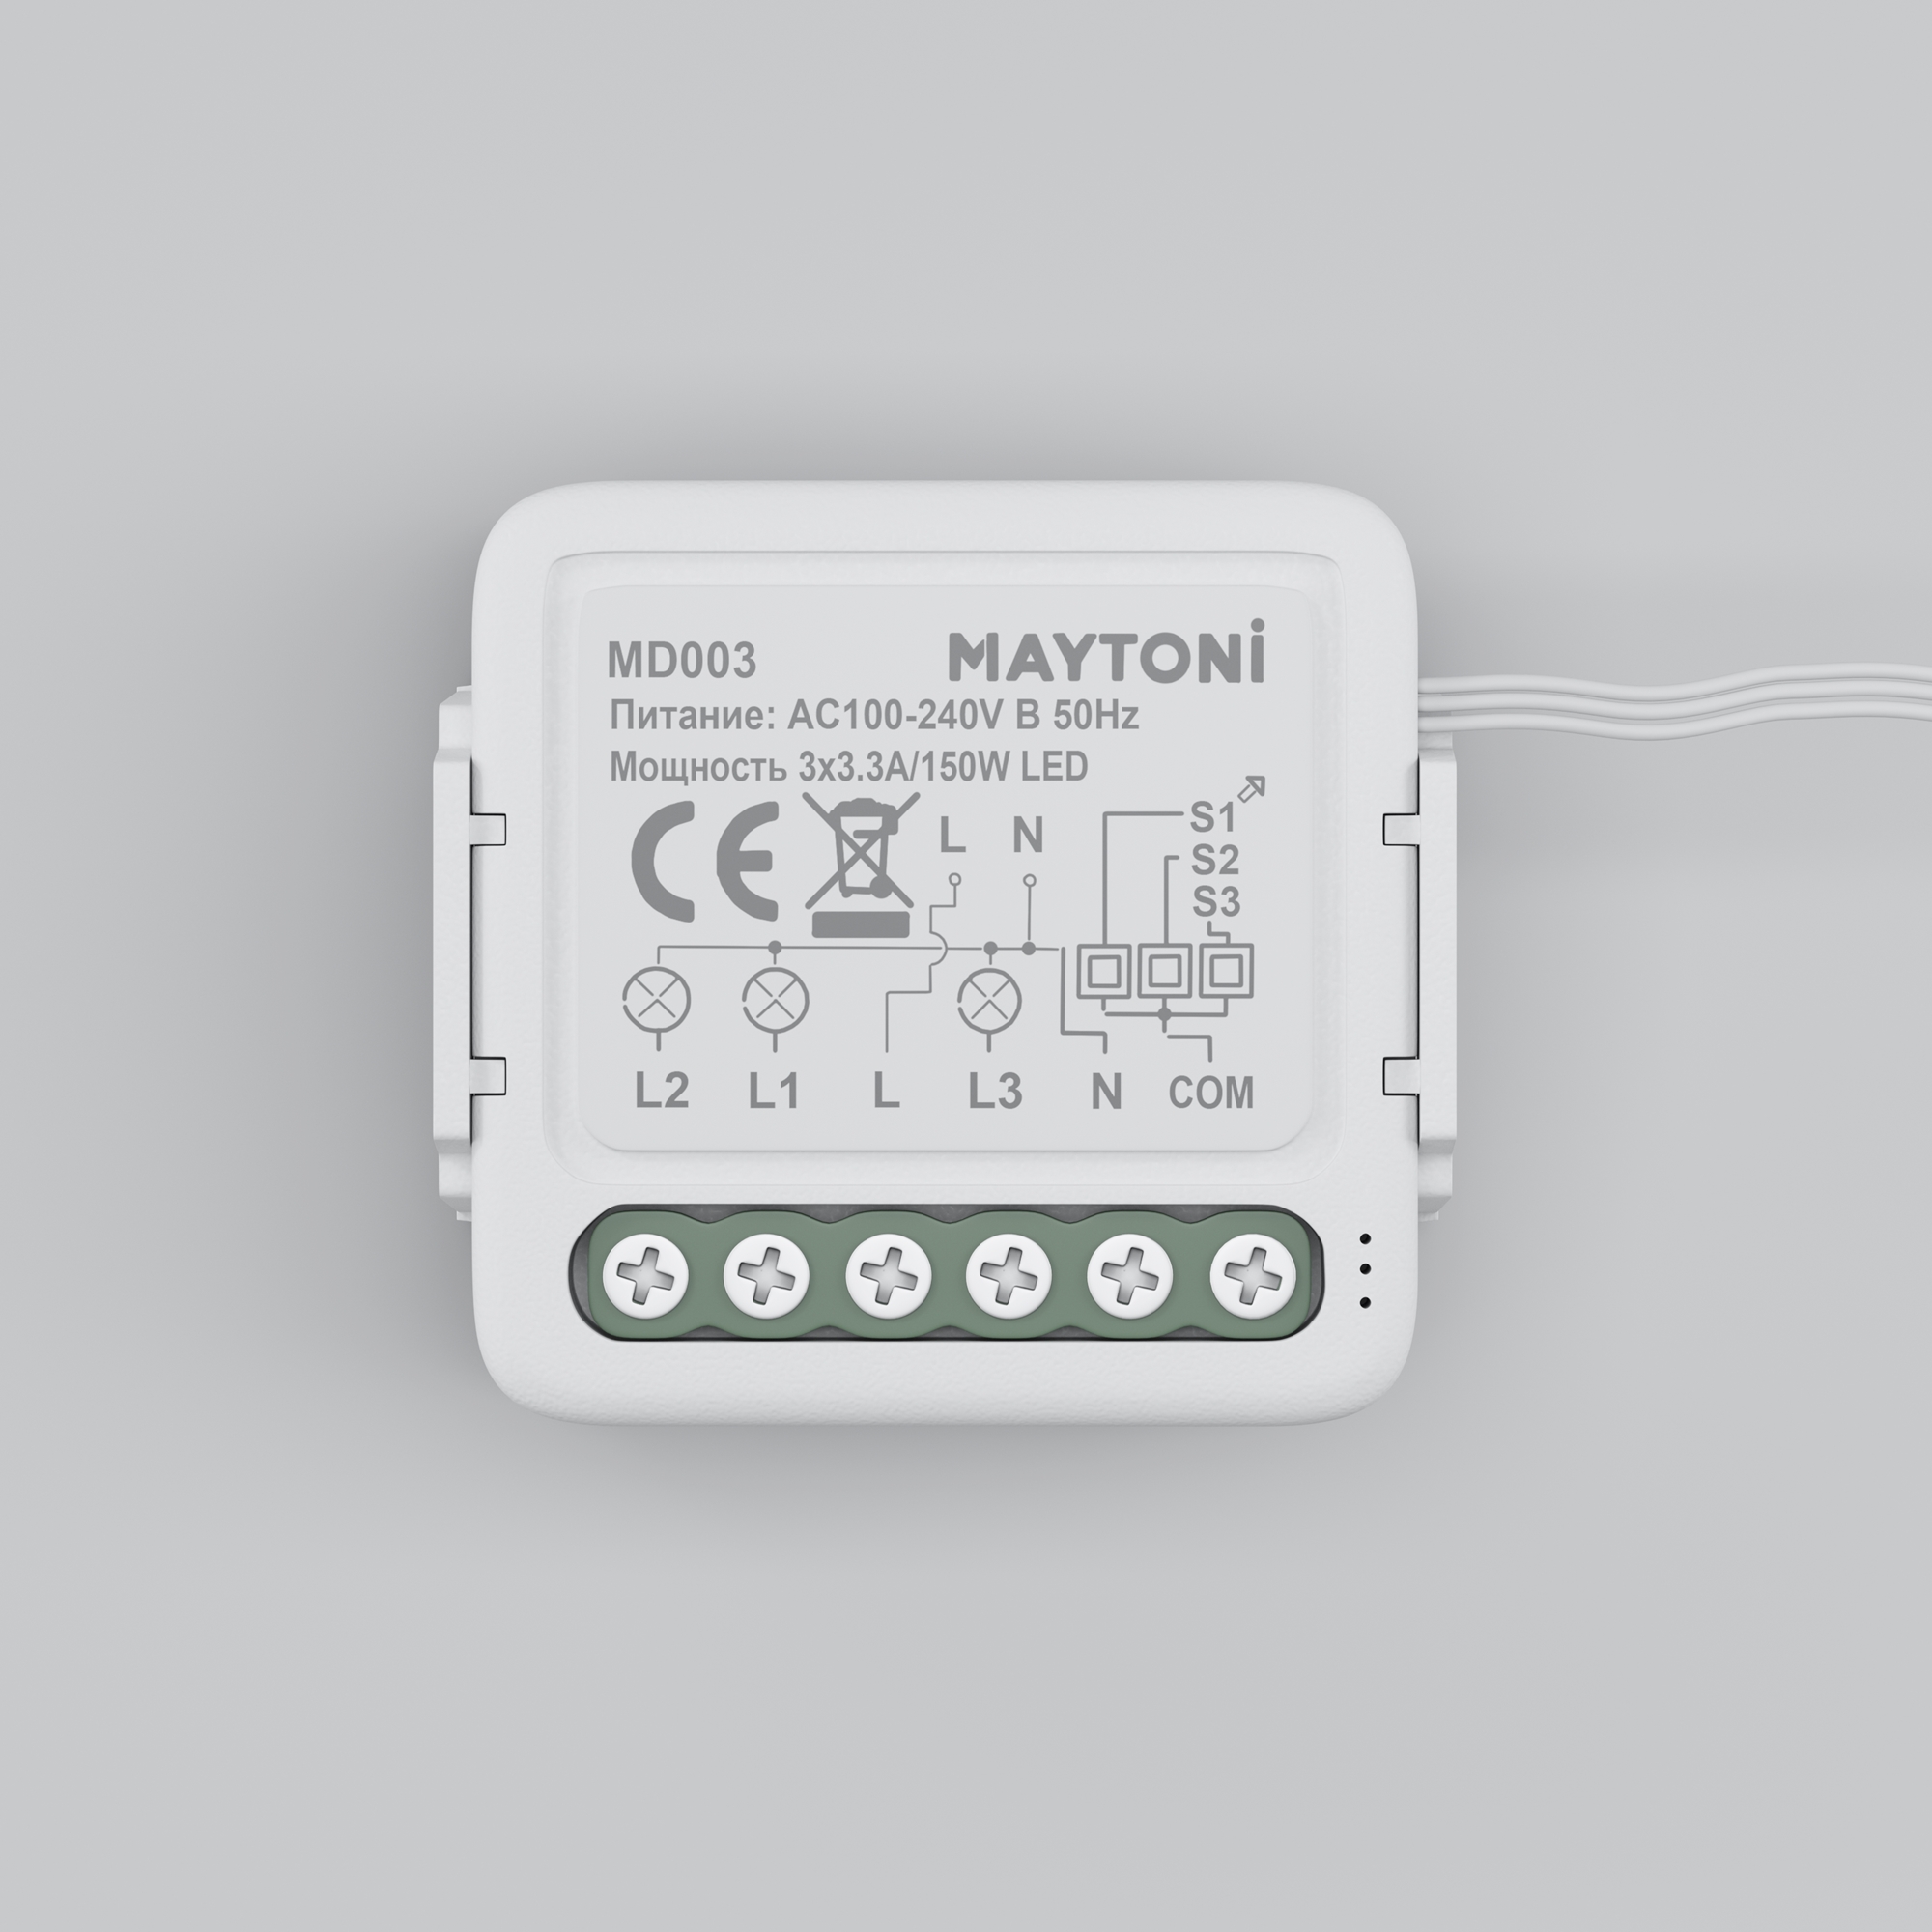 Реле Wi-Fi Maytoni MD003, цвет белый - фото 5